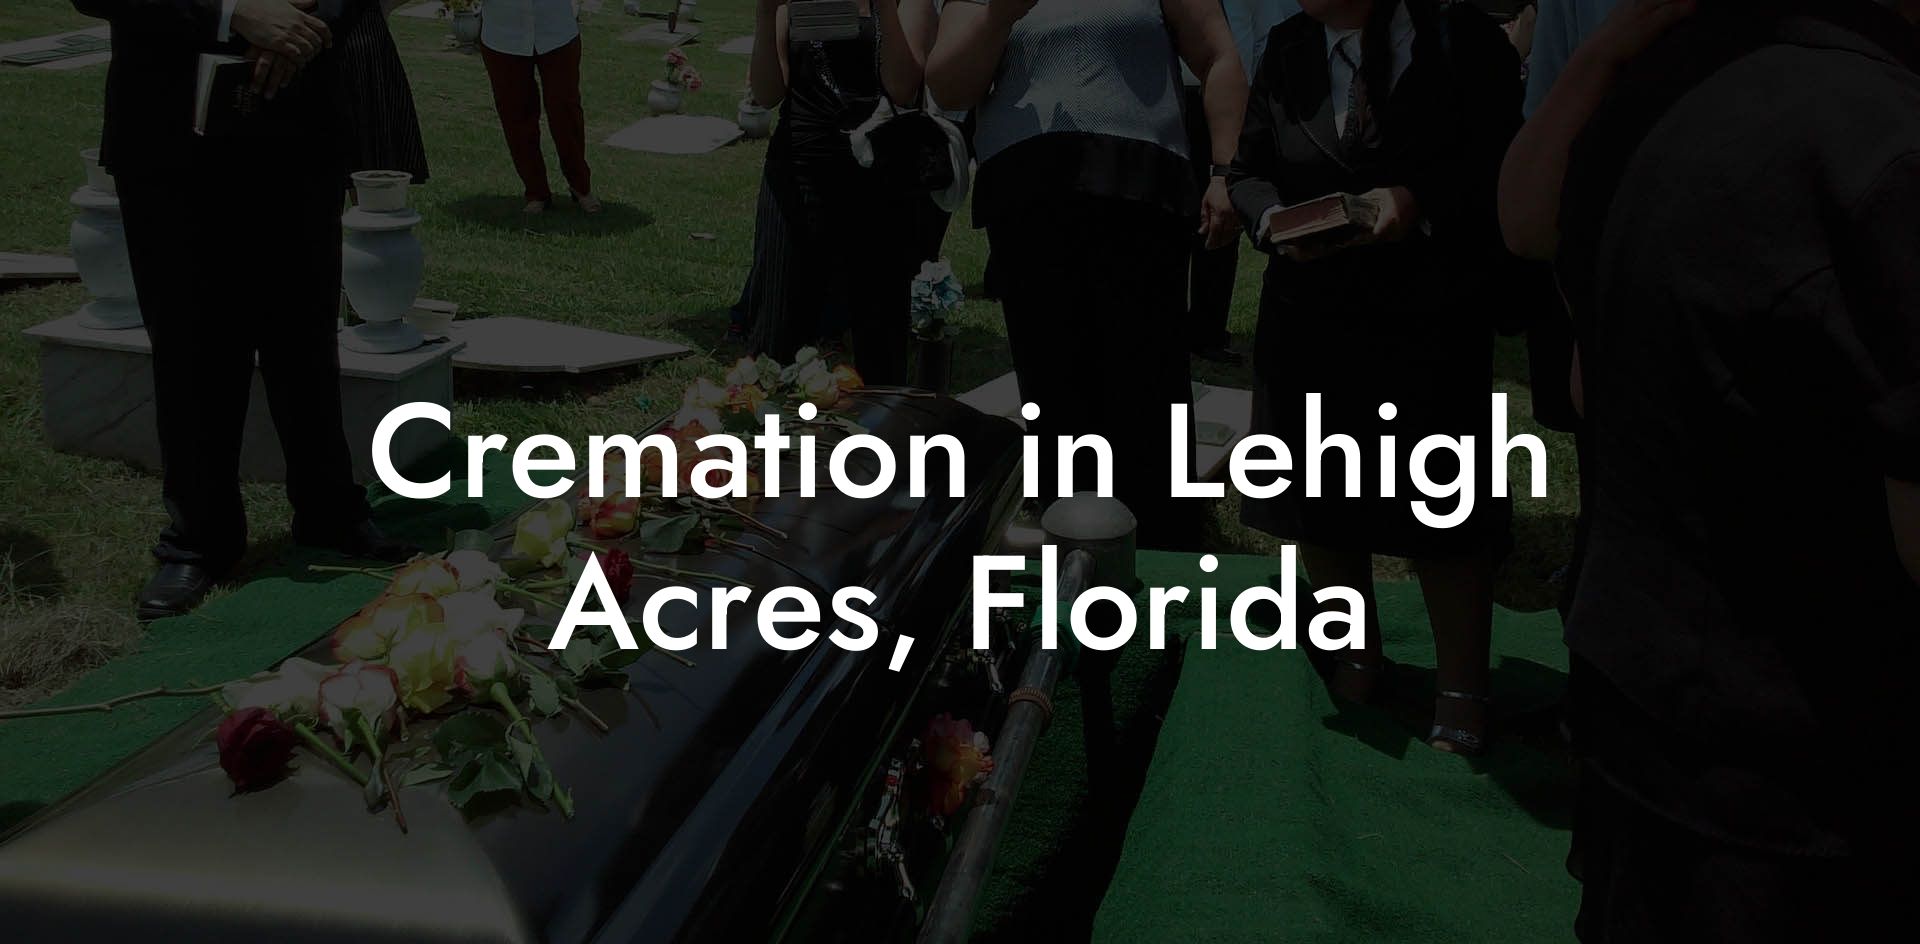 Cremation in Lehigh Acres, Florida